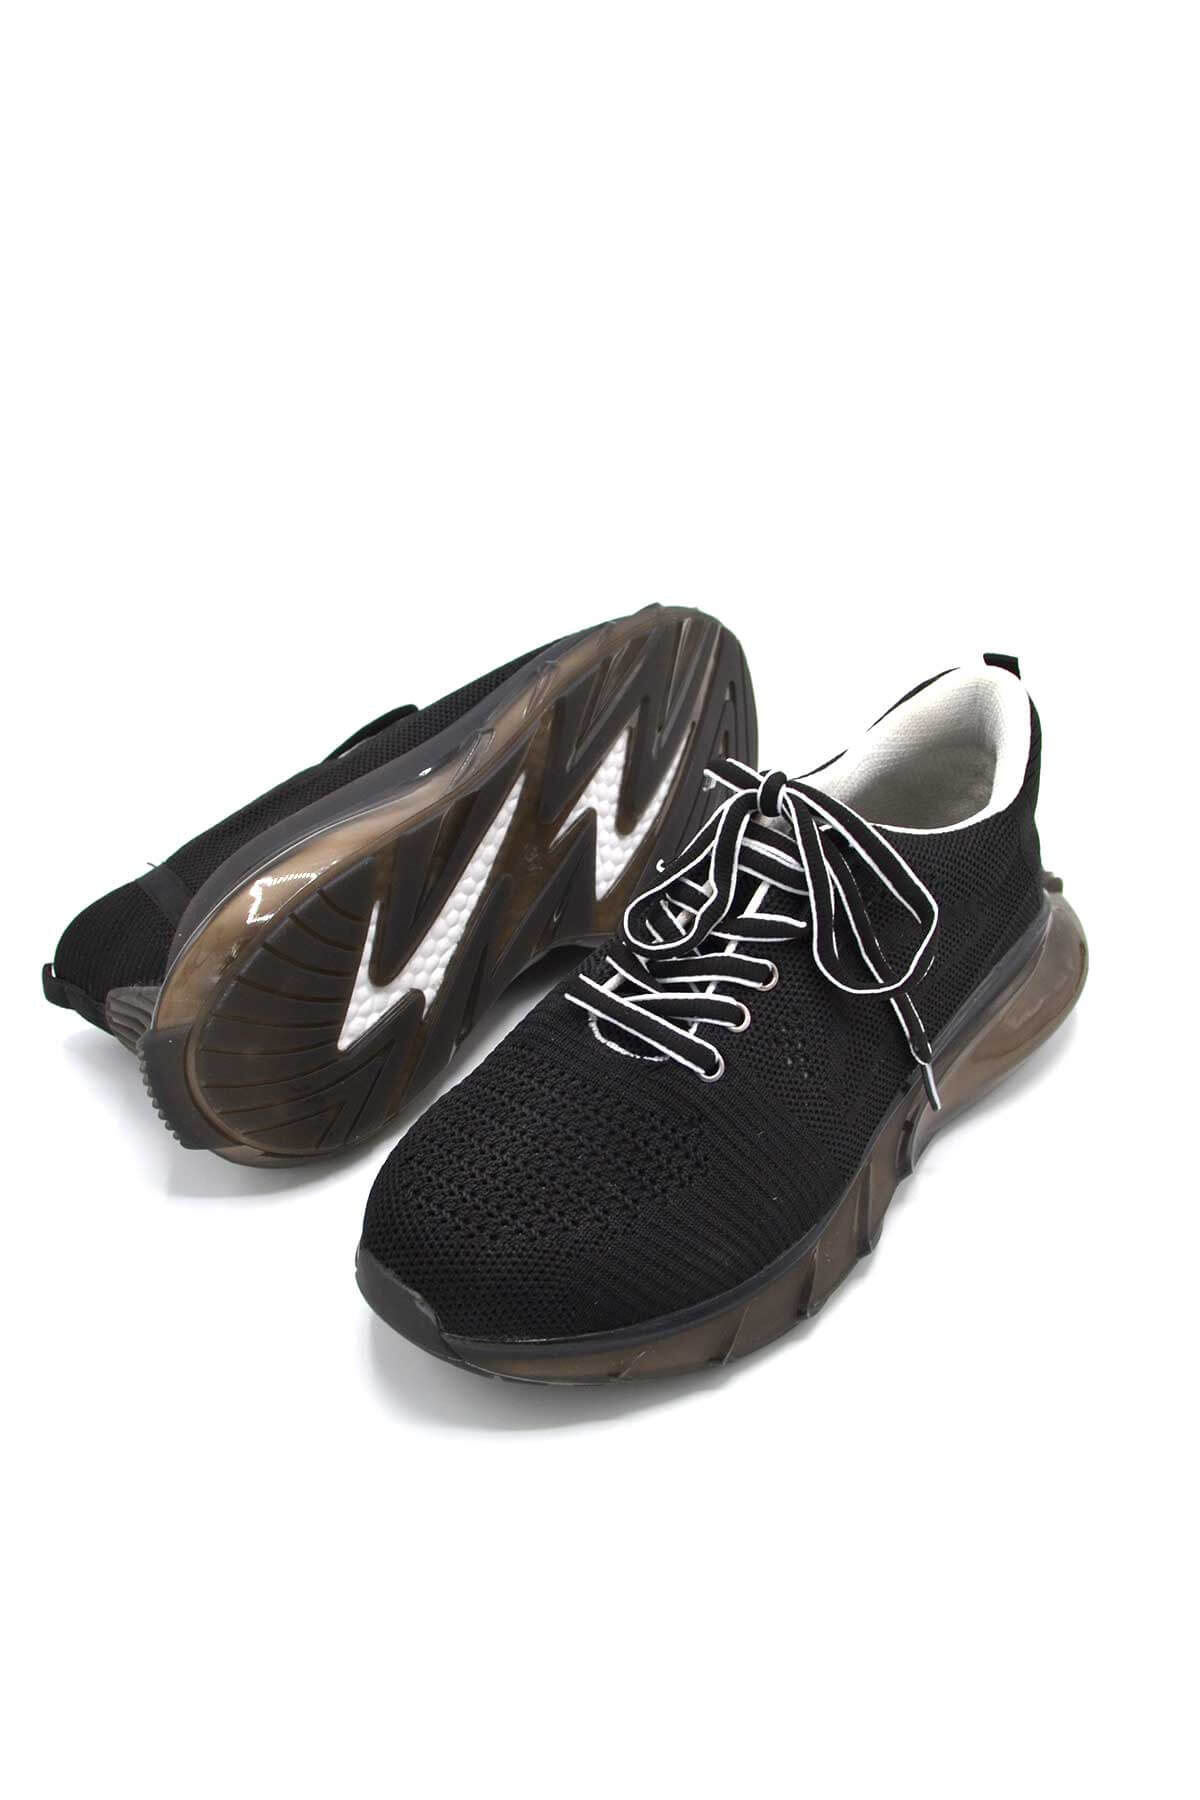 Kadın Sneakers Siyah 2217701Y - Thumbnail